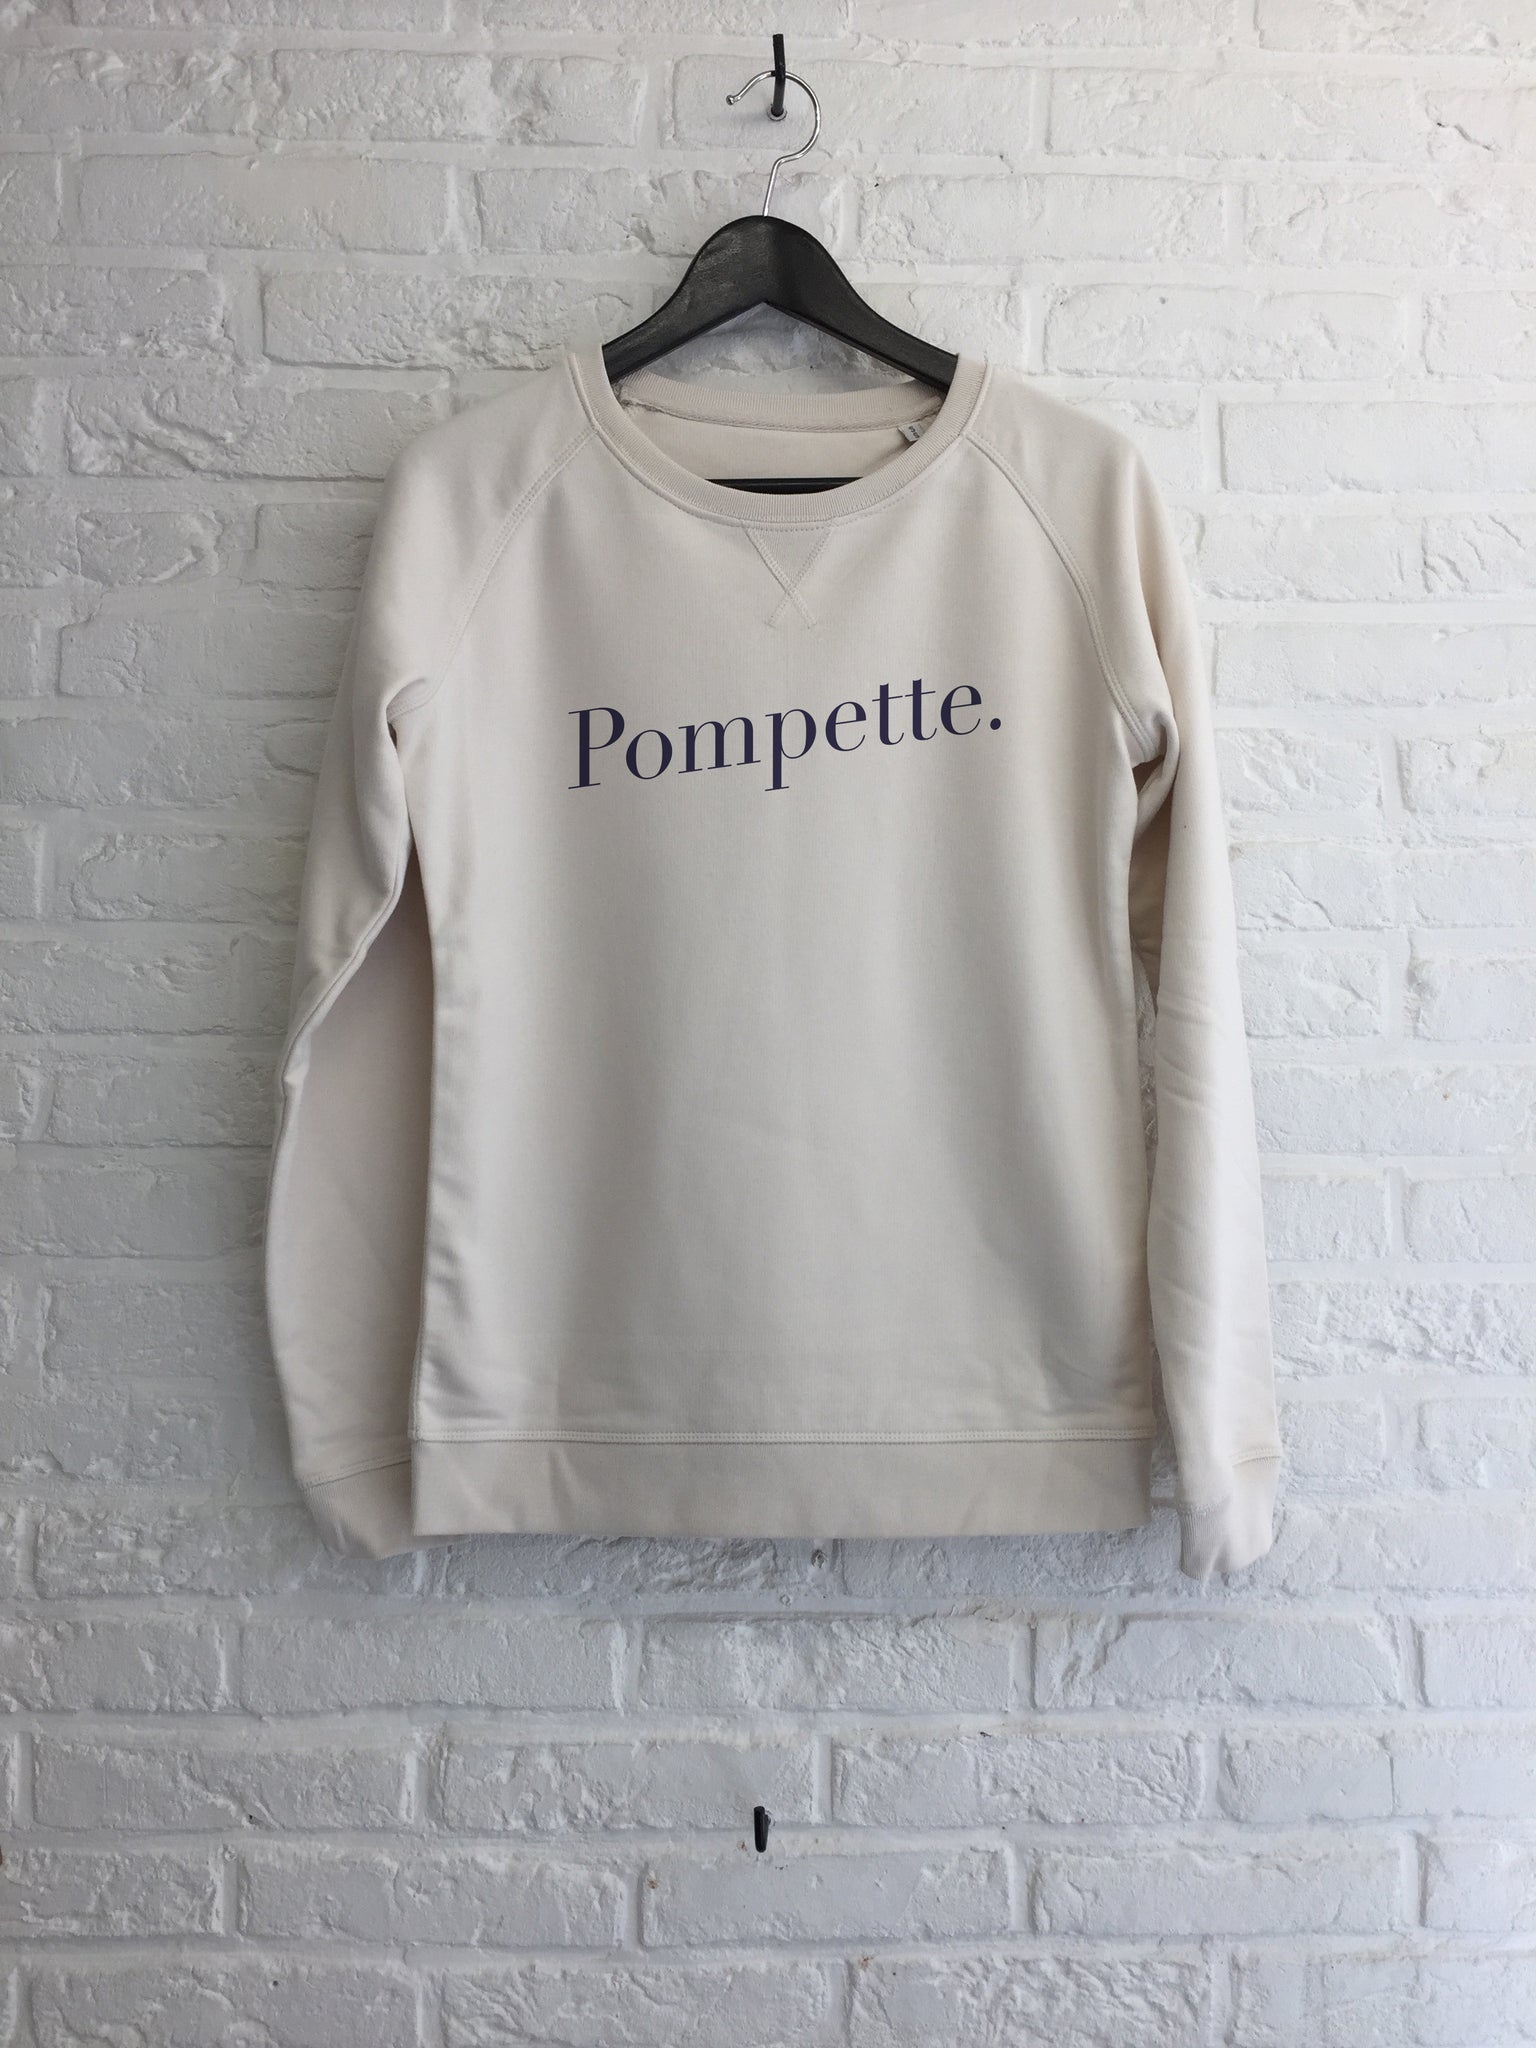 Pompette - Sweat - Femme-Sweat shirts-Atelier Amelot